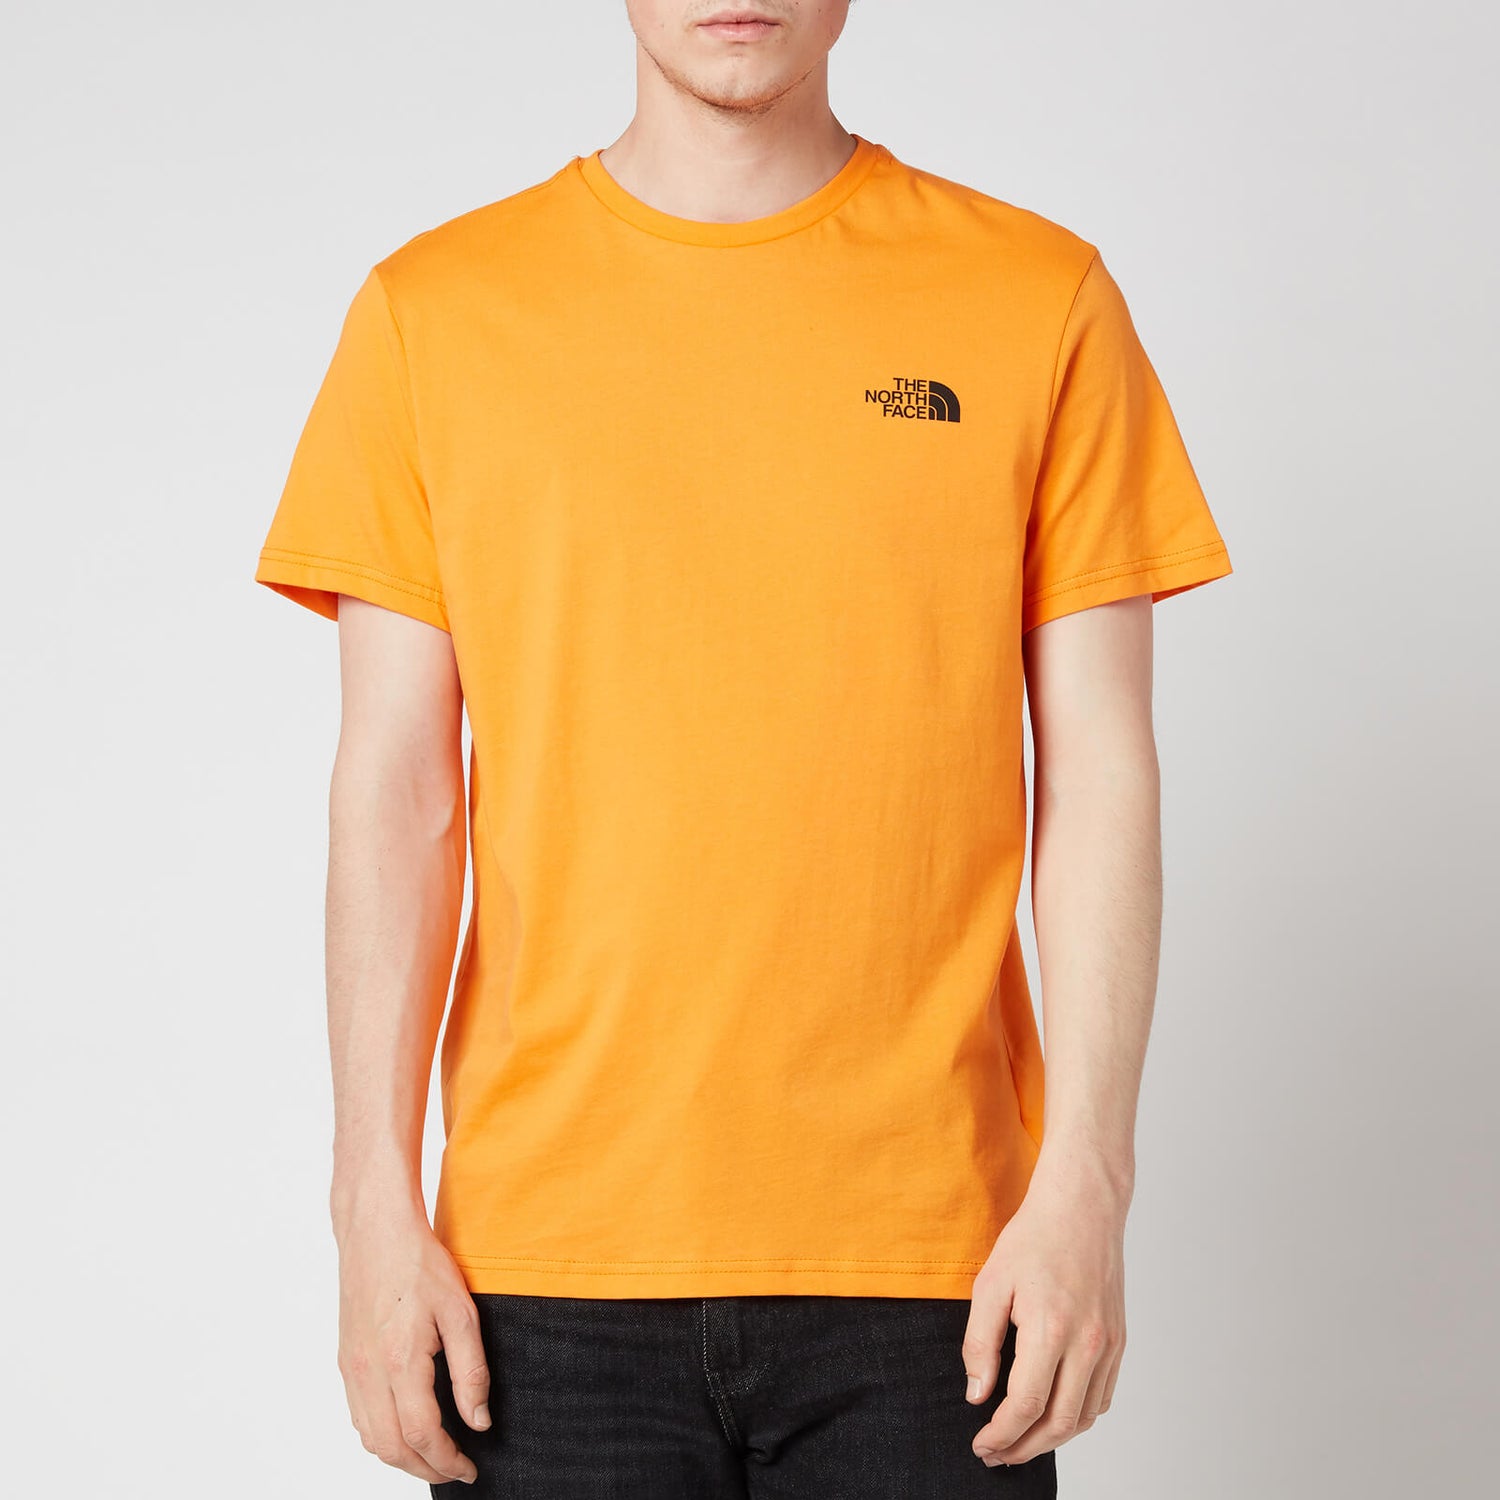 The North Face Men's Simple Dome Short Sleeve T-Shirt - Light Exuberance Orange